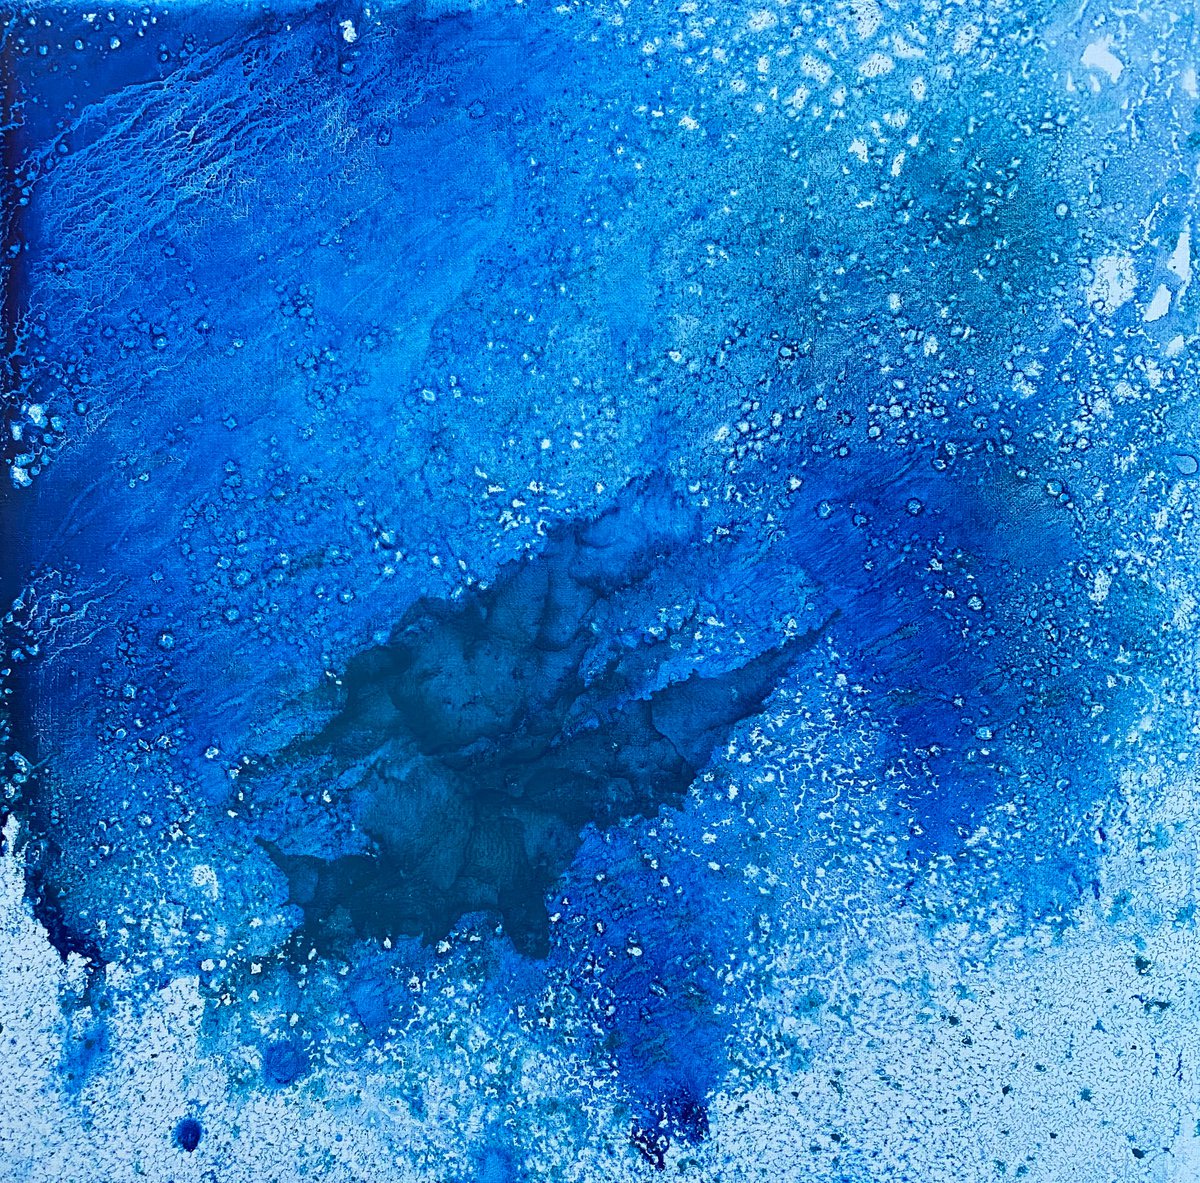 Blue abstract painting 2205202011 by Natalya Burgos